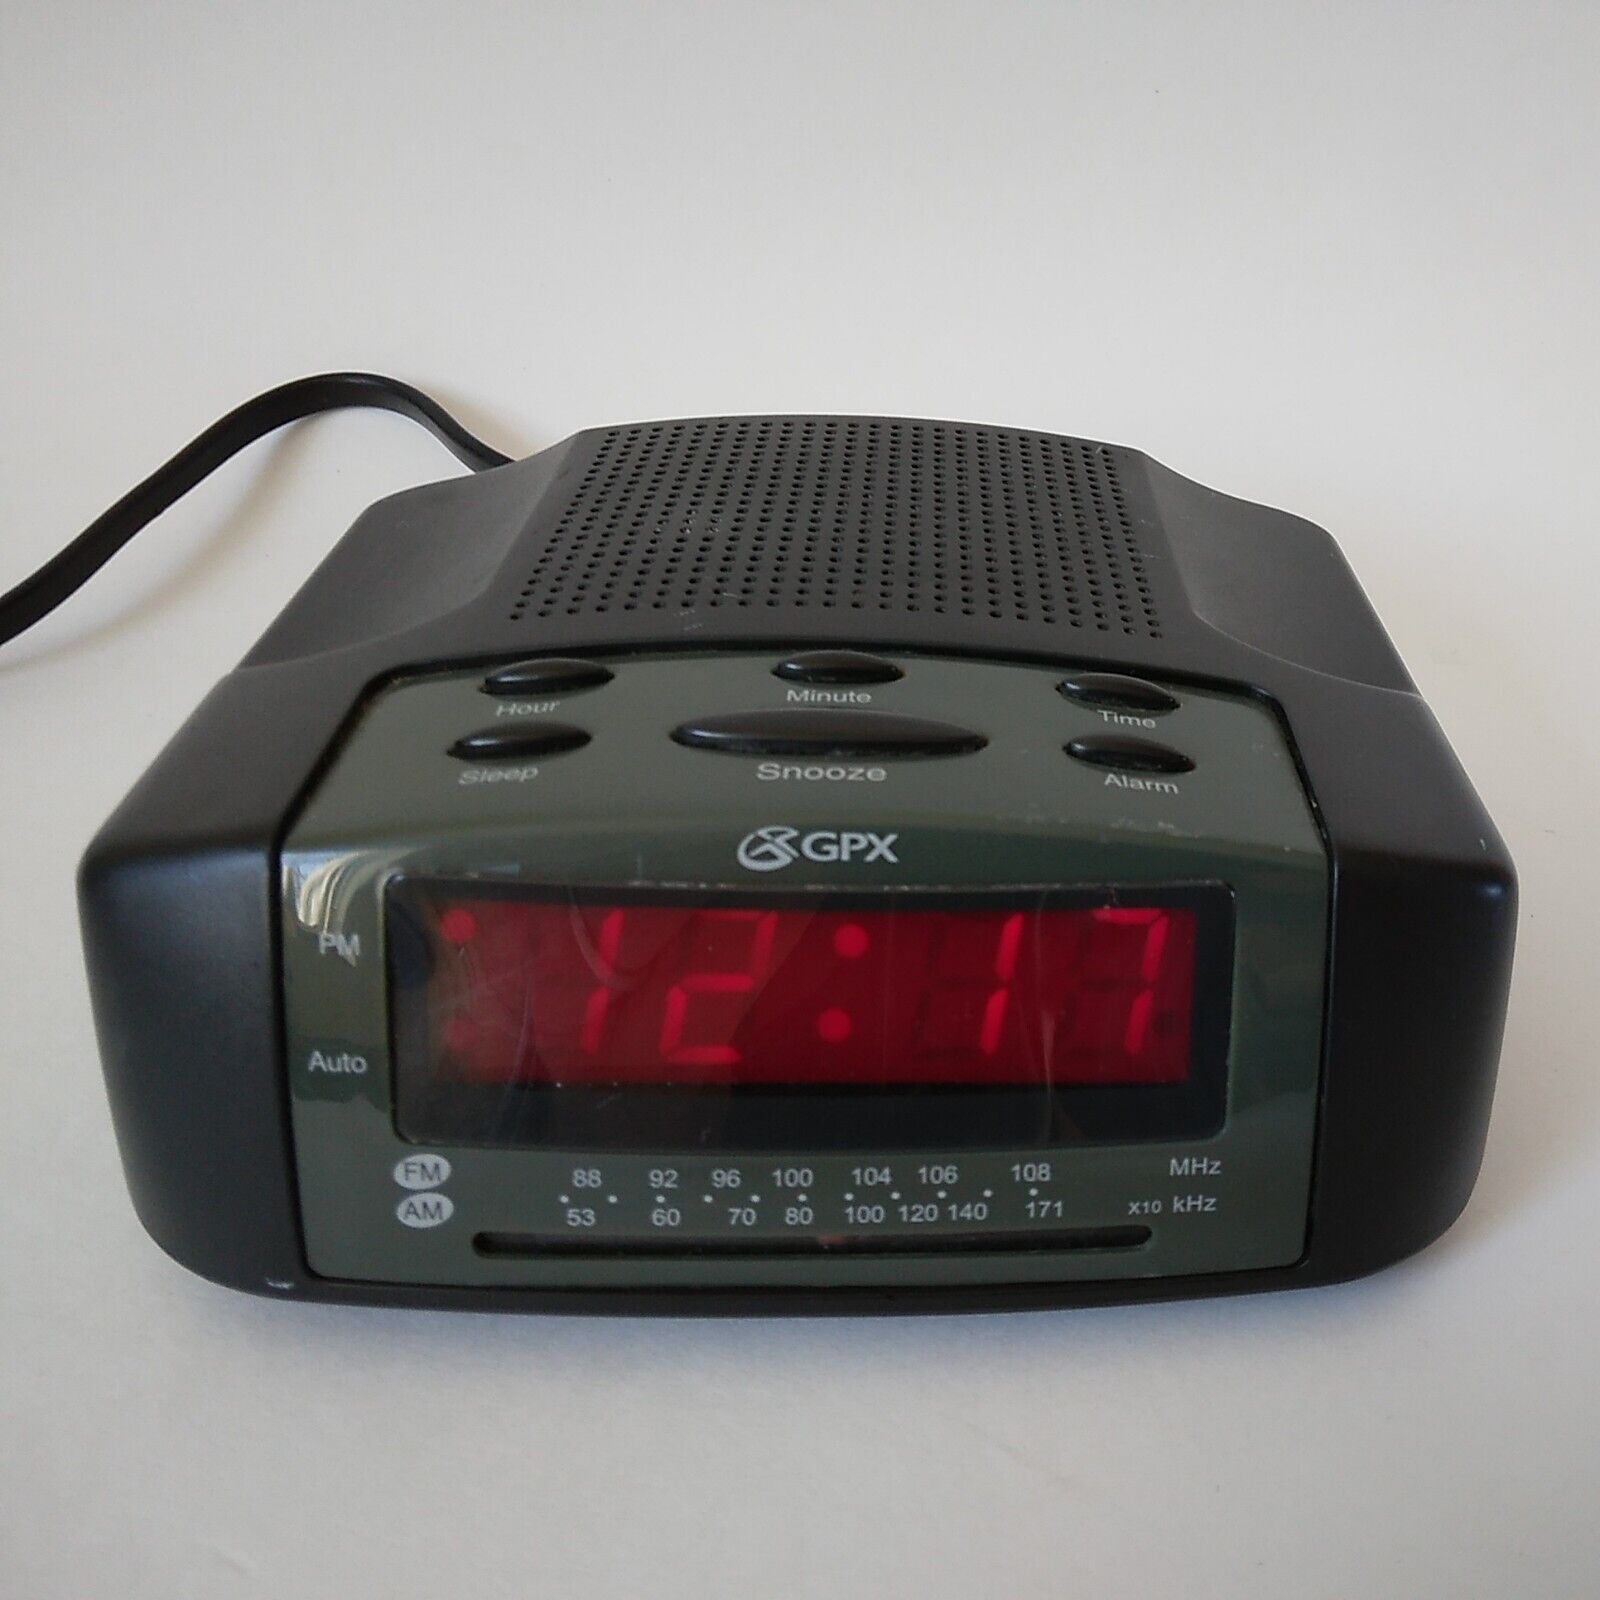 GPX Radio Alarm Clock Model: CR2004-Green/Black-Corded/Batt.Bkup.-Tested/Works